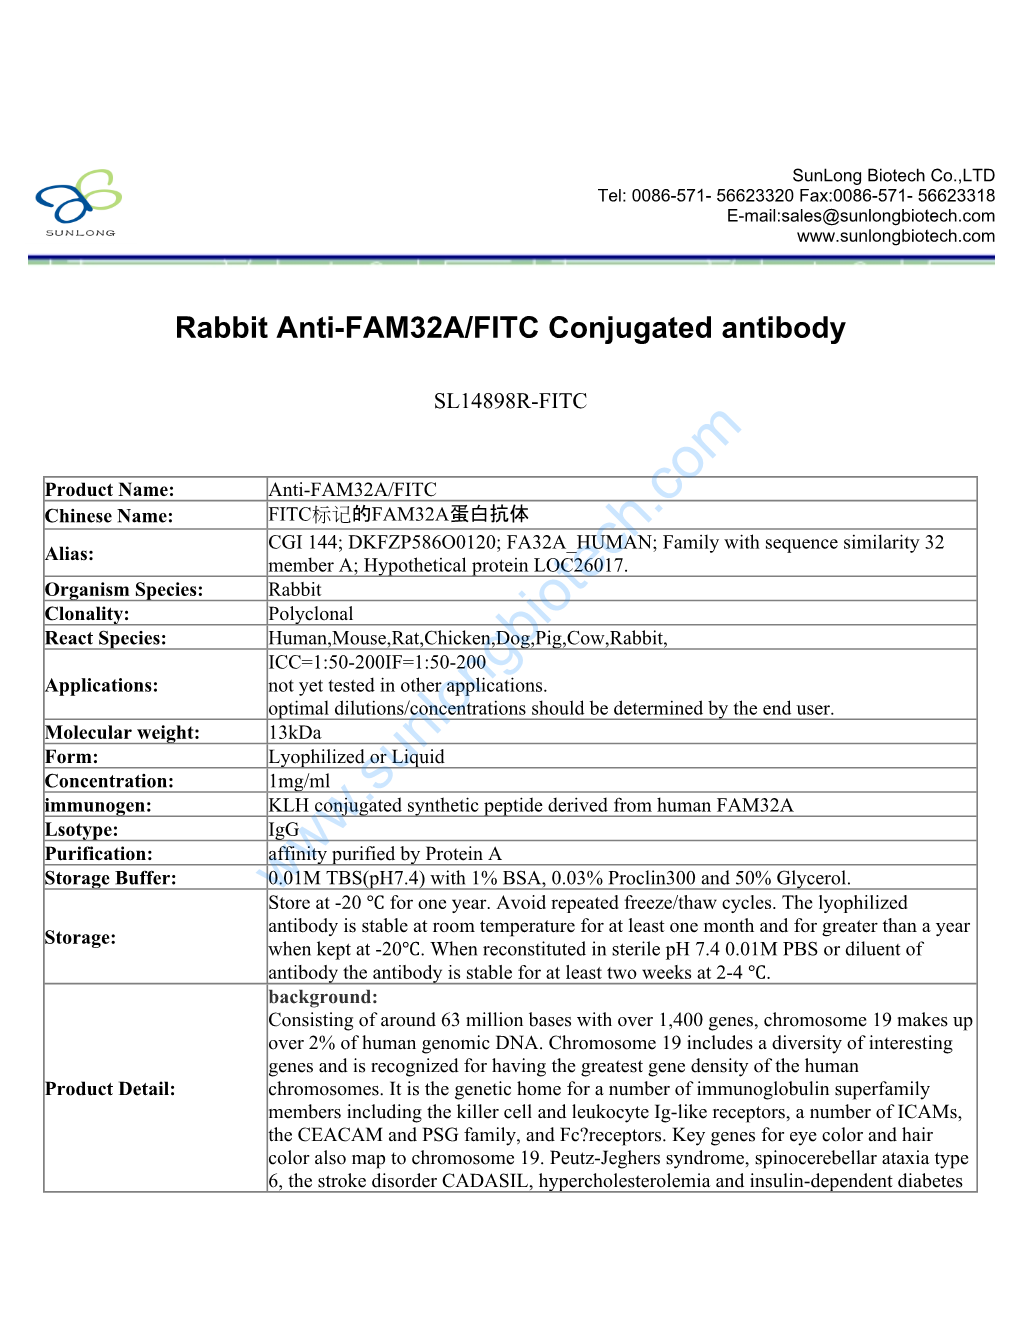 Rabbit Anti-FAM32A/FITC Conjugated Antibody